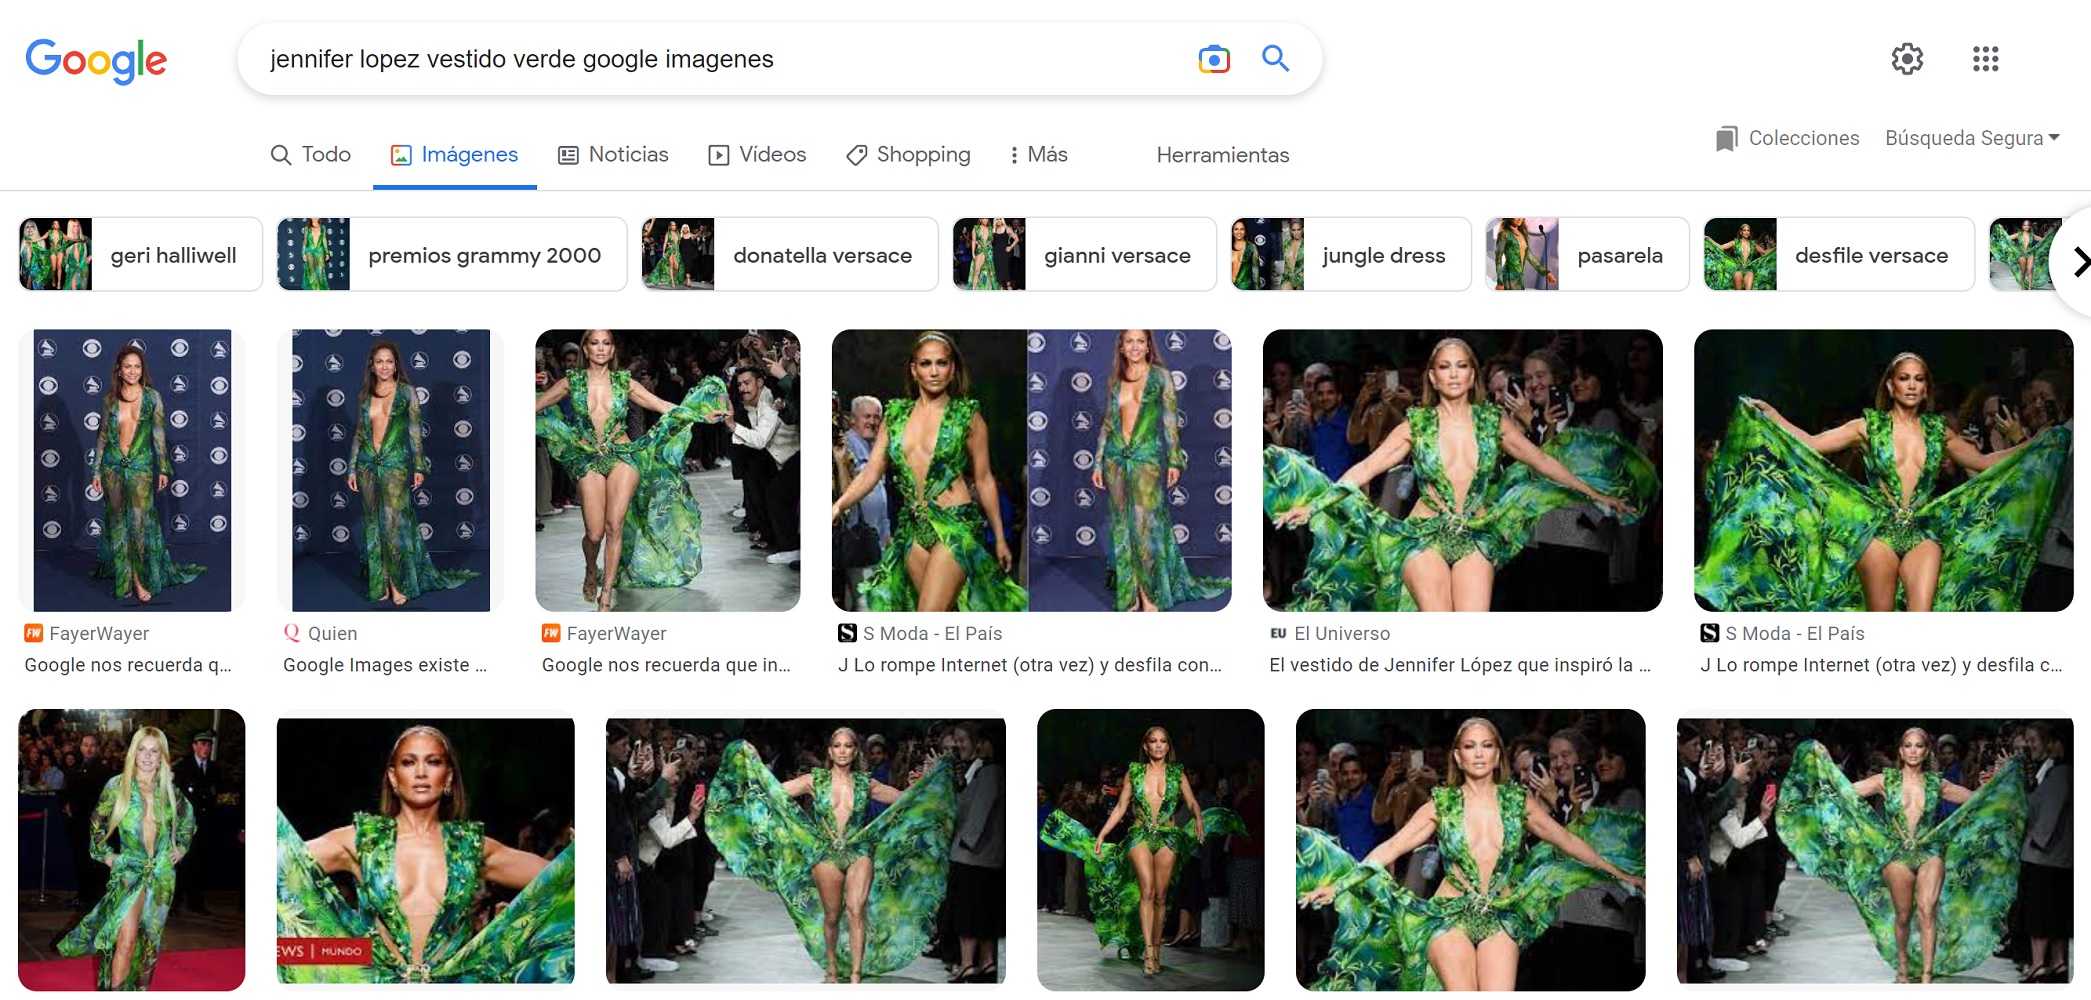 El vestido verde de Jennifer López